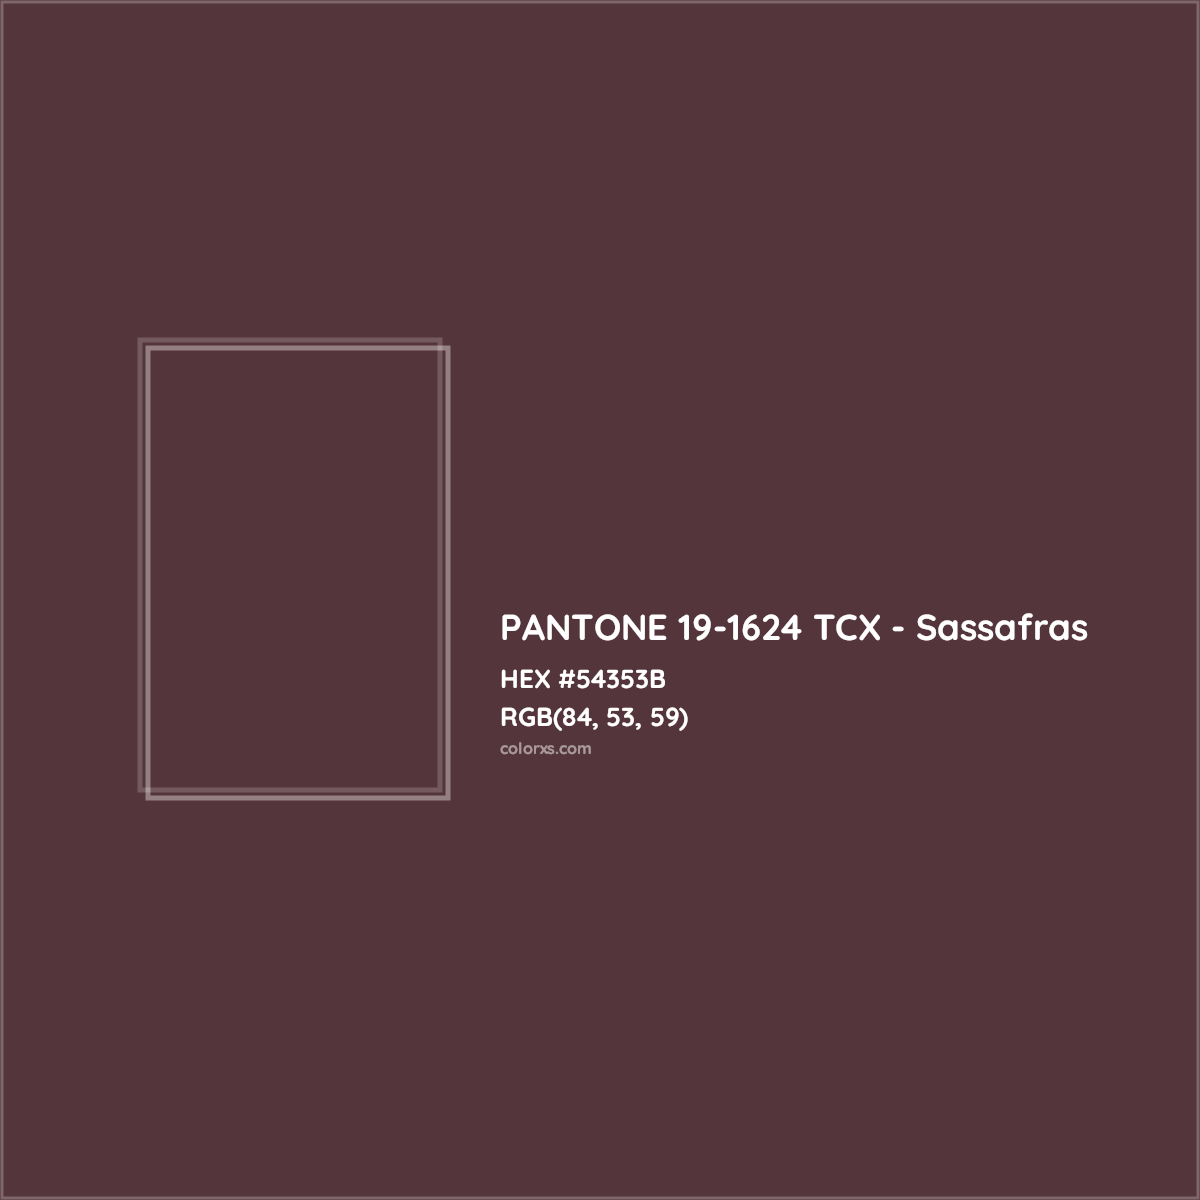 HEX #54353B PANTONE 19-1624 TCX - Sassafras CMS Pantone TCX - Color Code